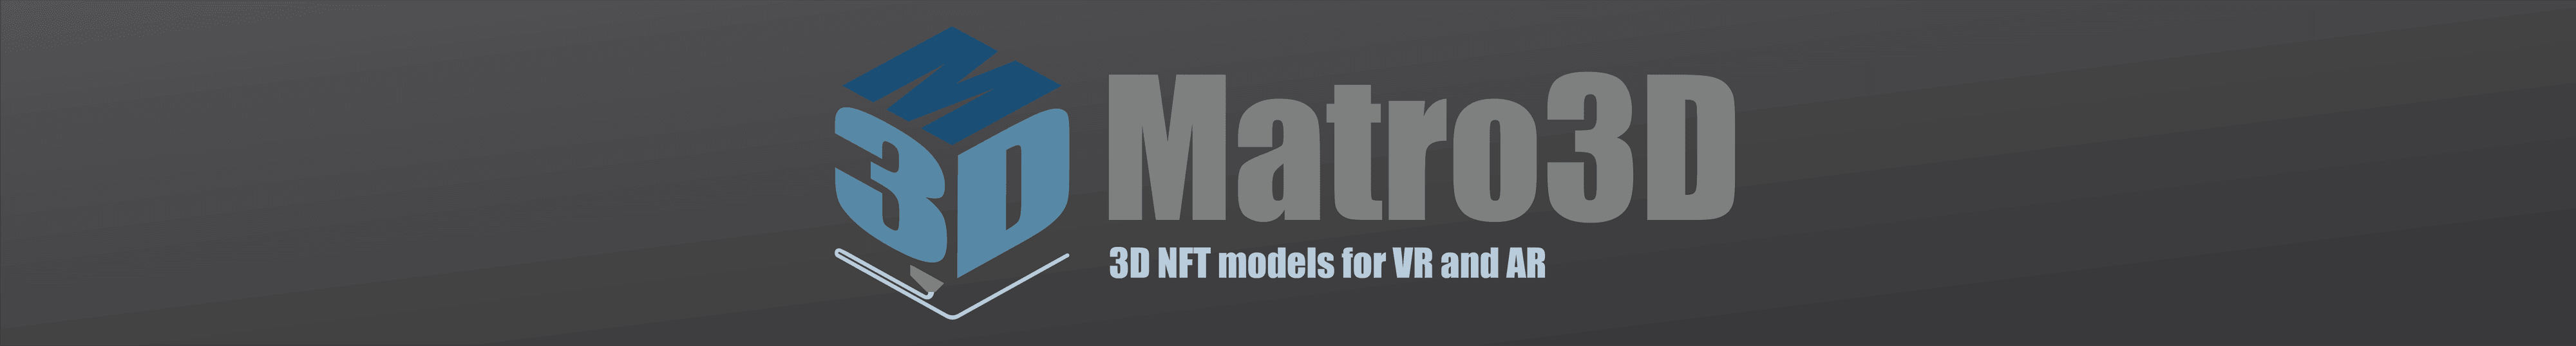 Matro3D banner